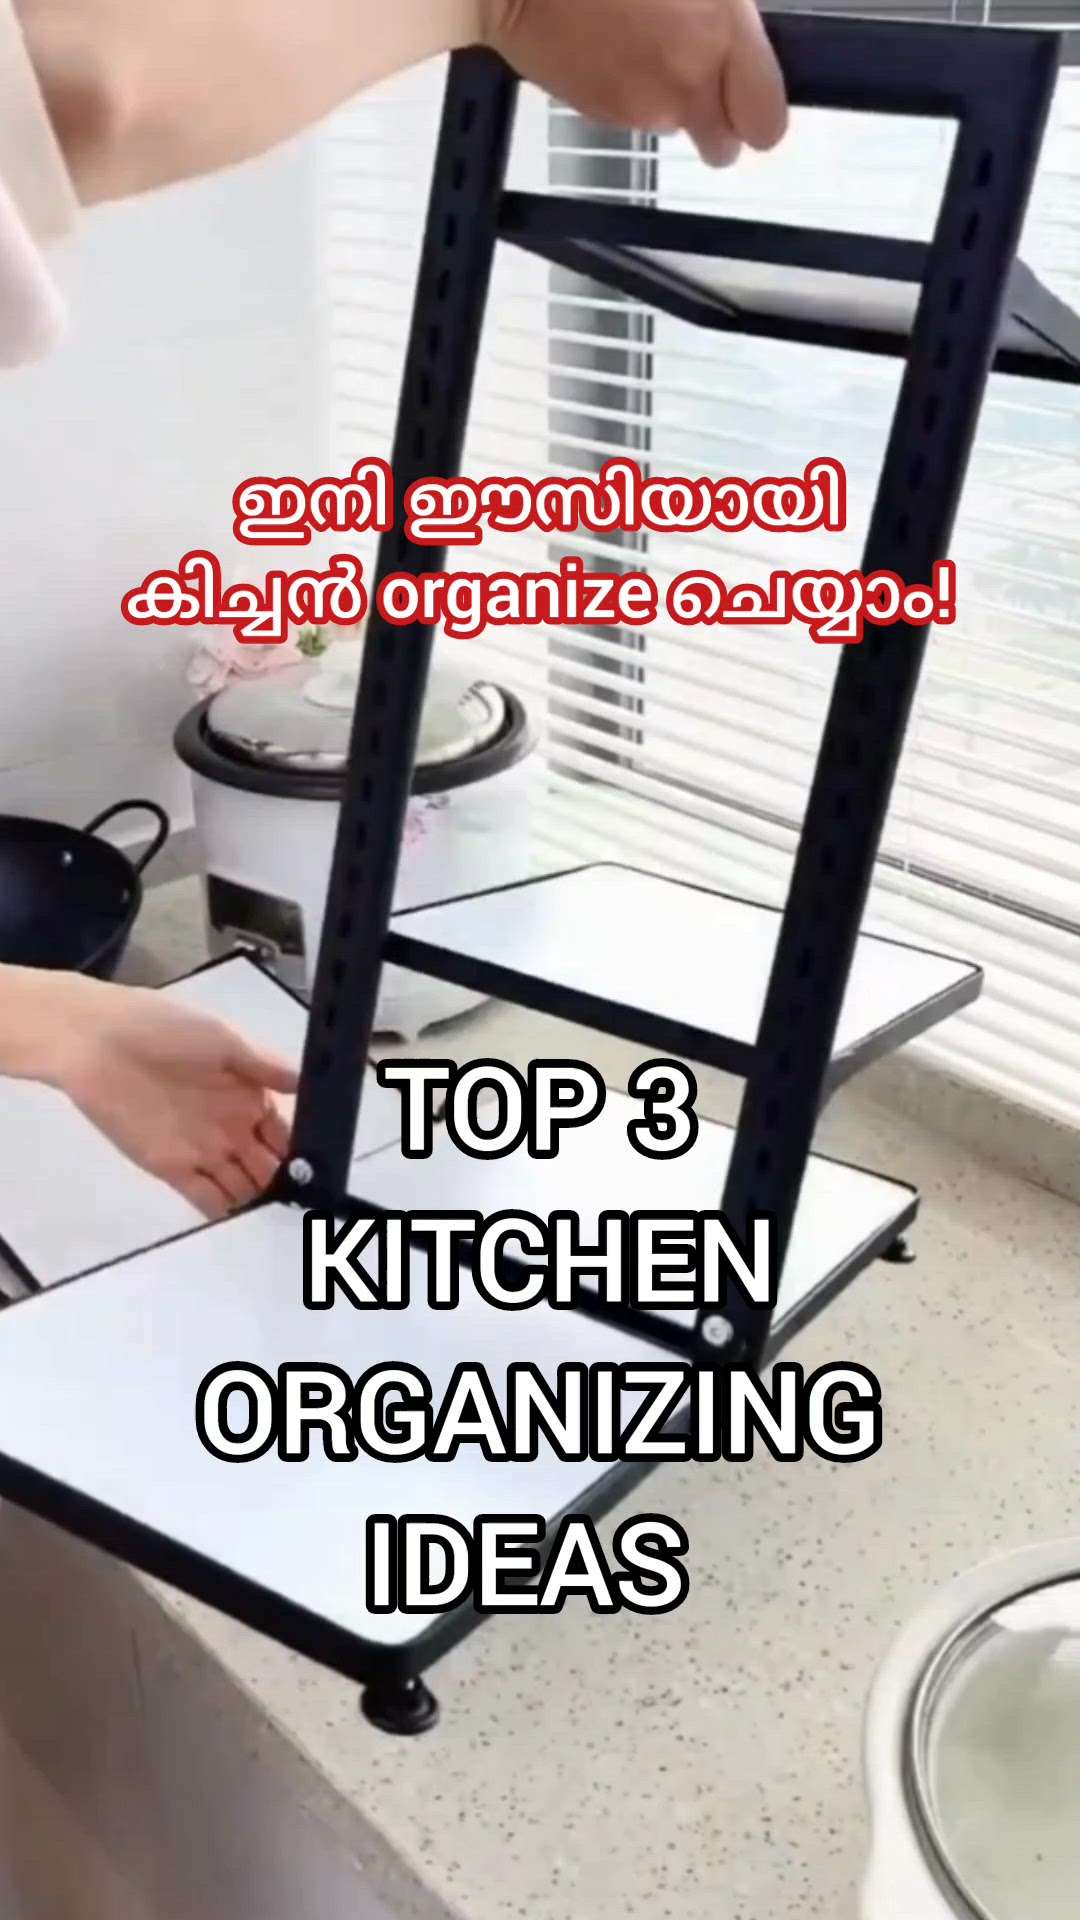 top 3 kitchen organizing ideas

#Creatorsofkolo #top3 #kitchenideas #modernhome #ideas #kitchen  #kitchenorganization